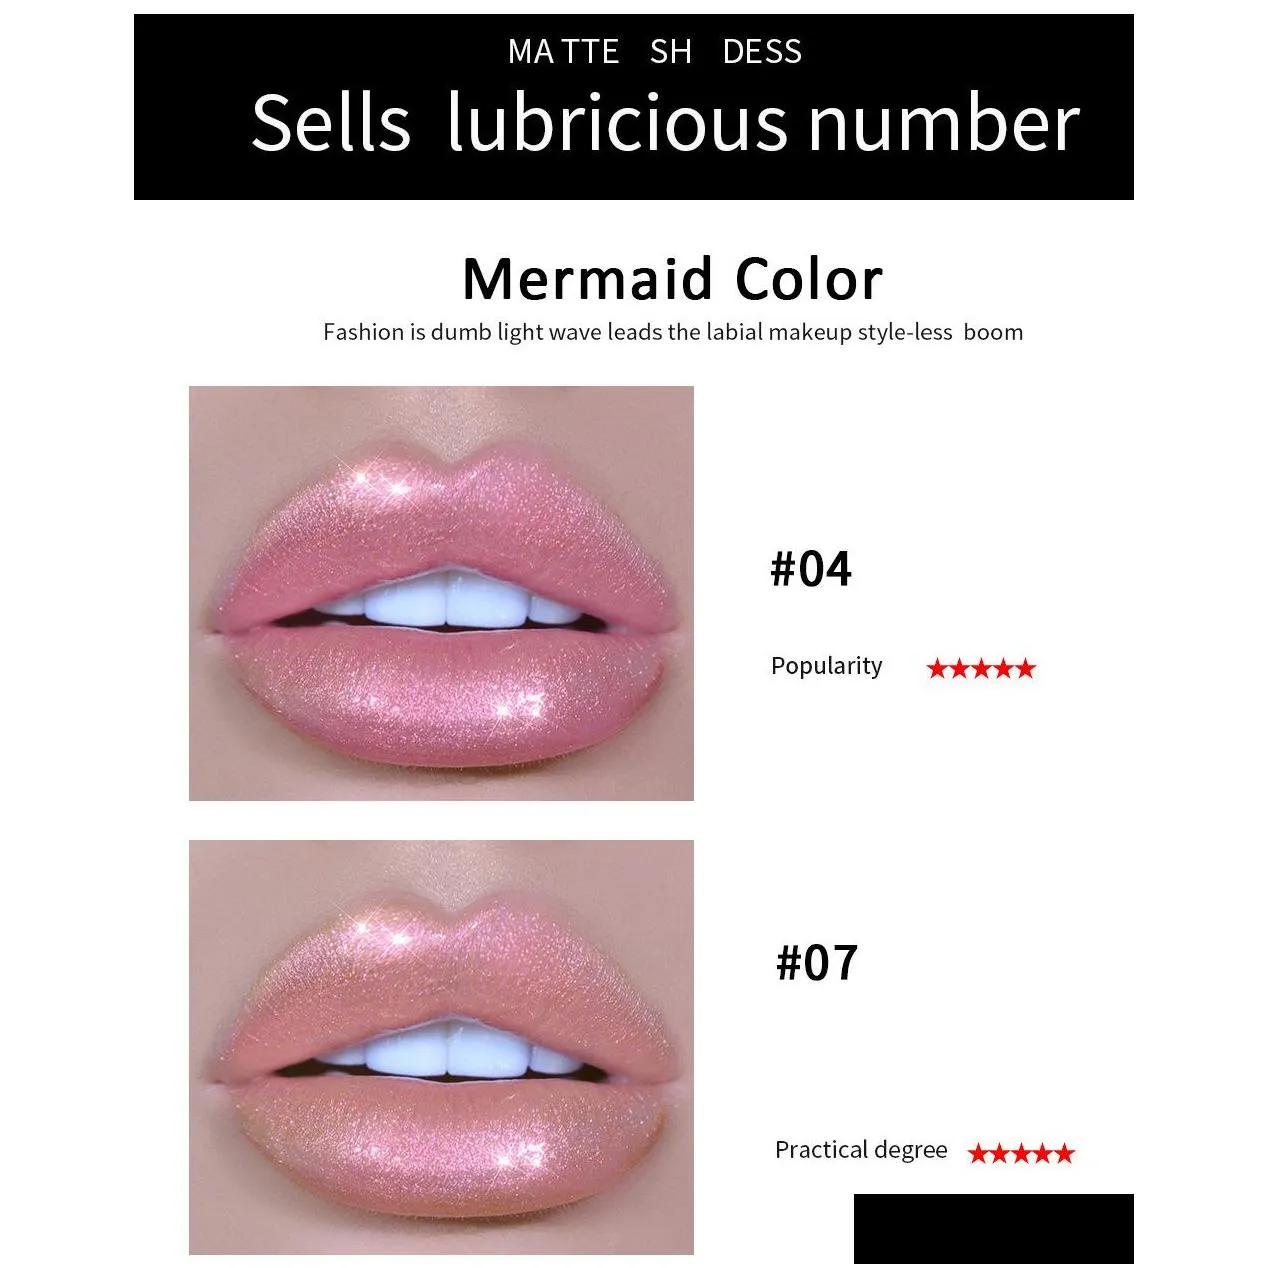 drop handaiyan 6piece lip gloss collection moistarize mermaid crystal cream glaze set 2.3mlx6 maquillage..